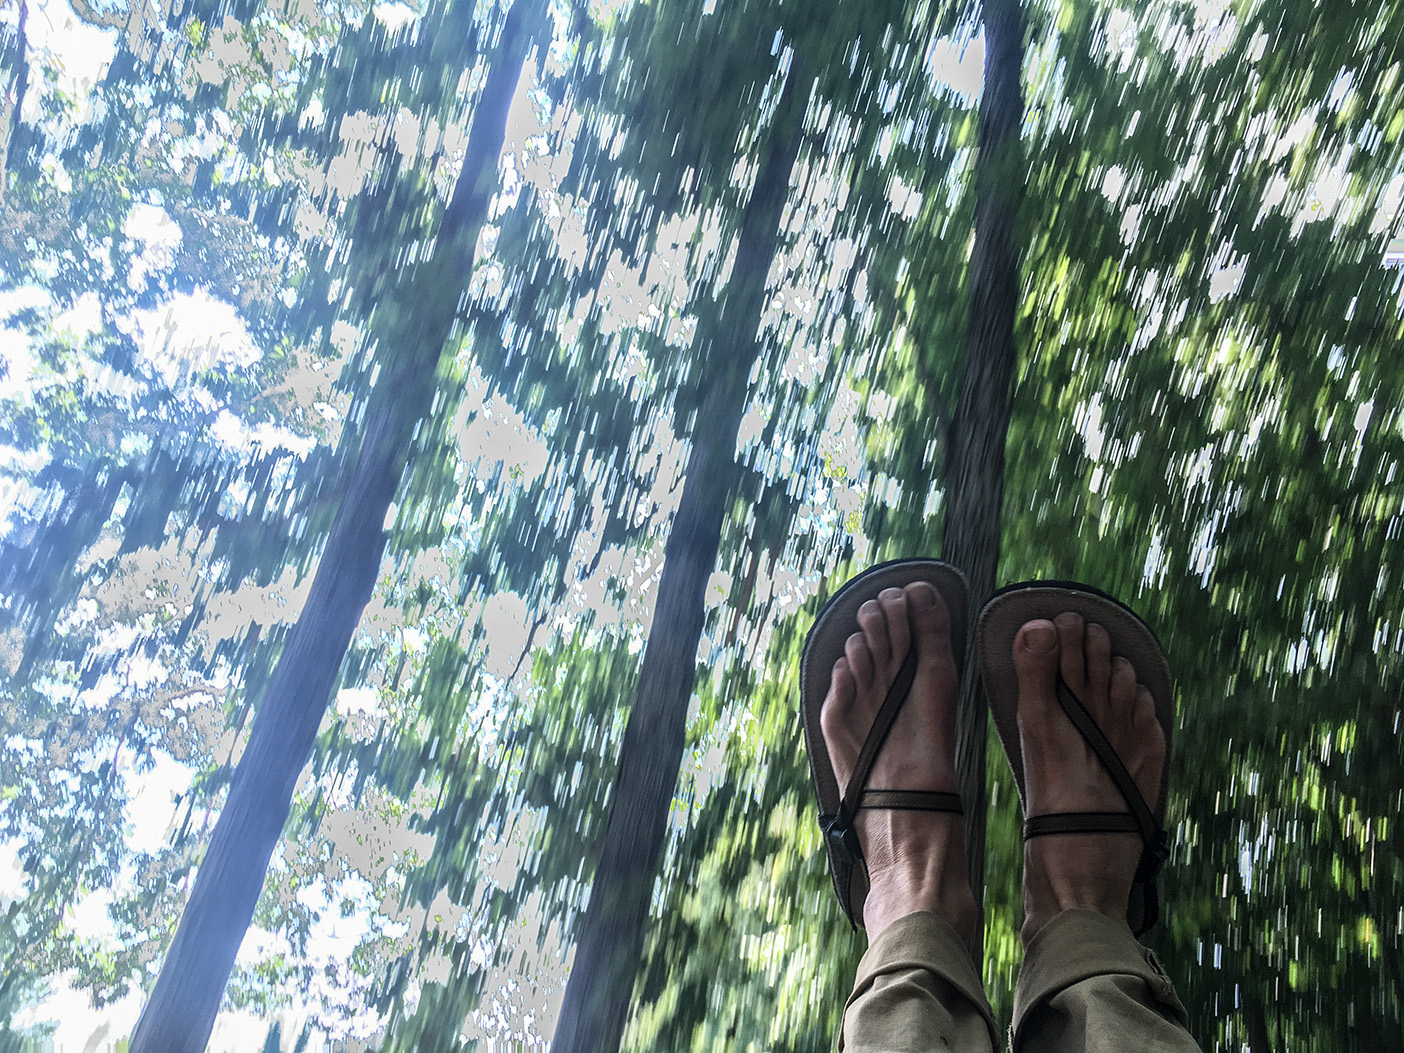 Feet of someone swinging amid trees.